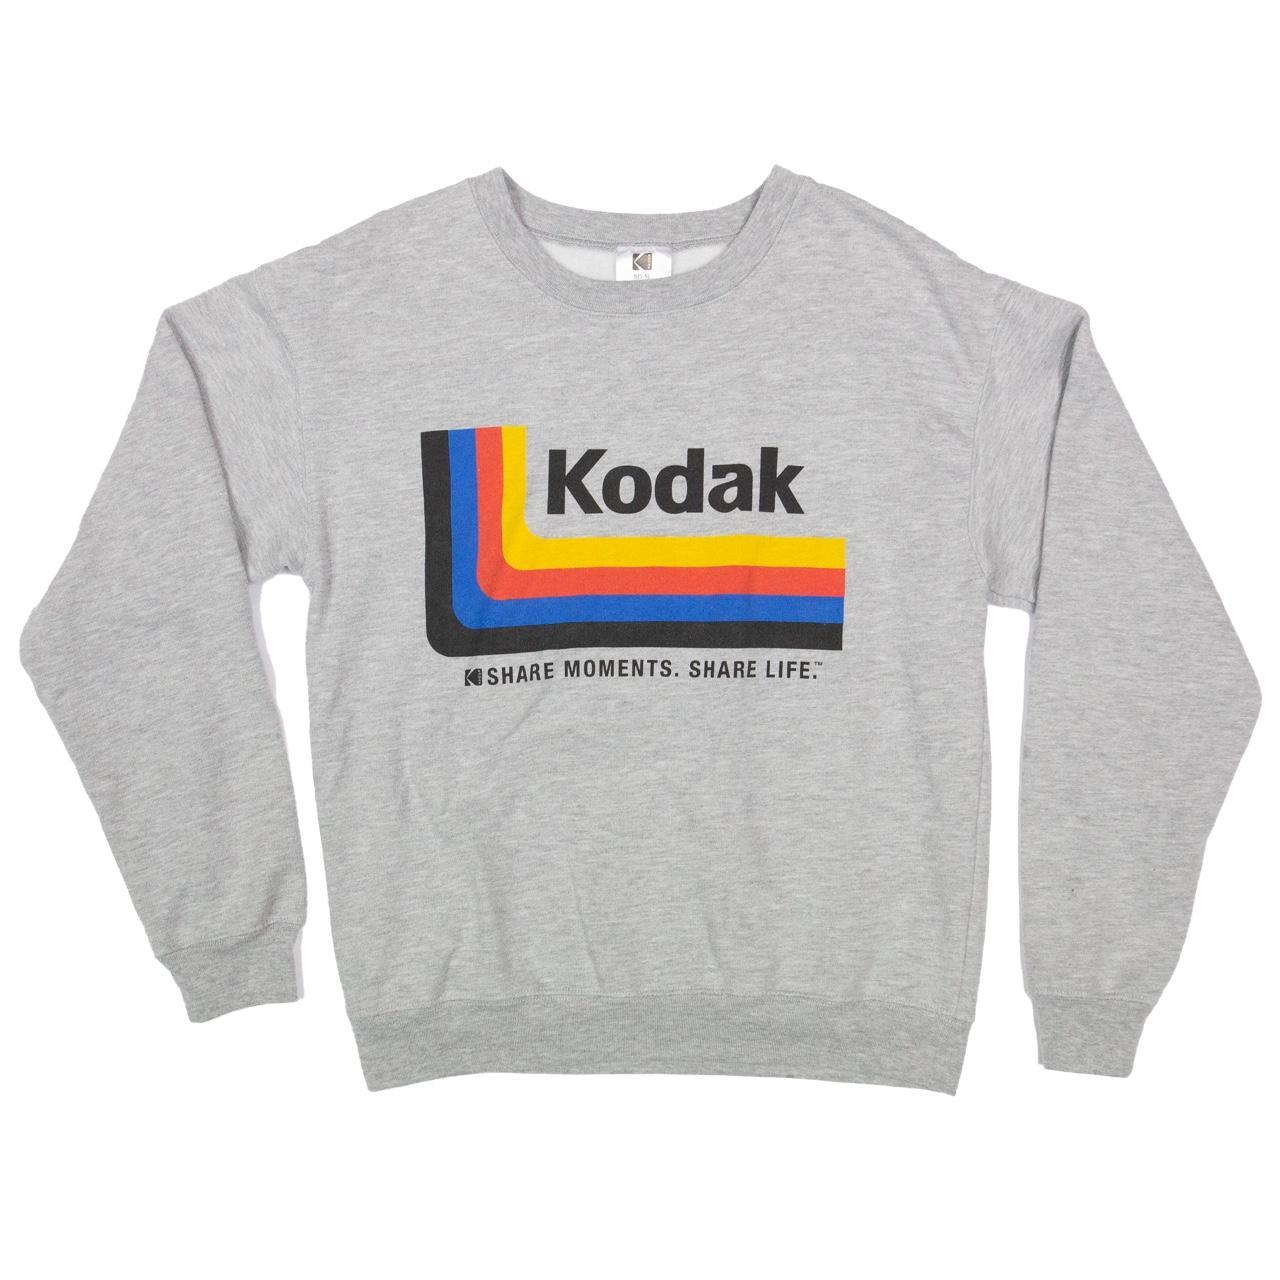 Kodak Men's Grey Sweatshirt